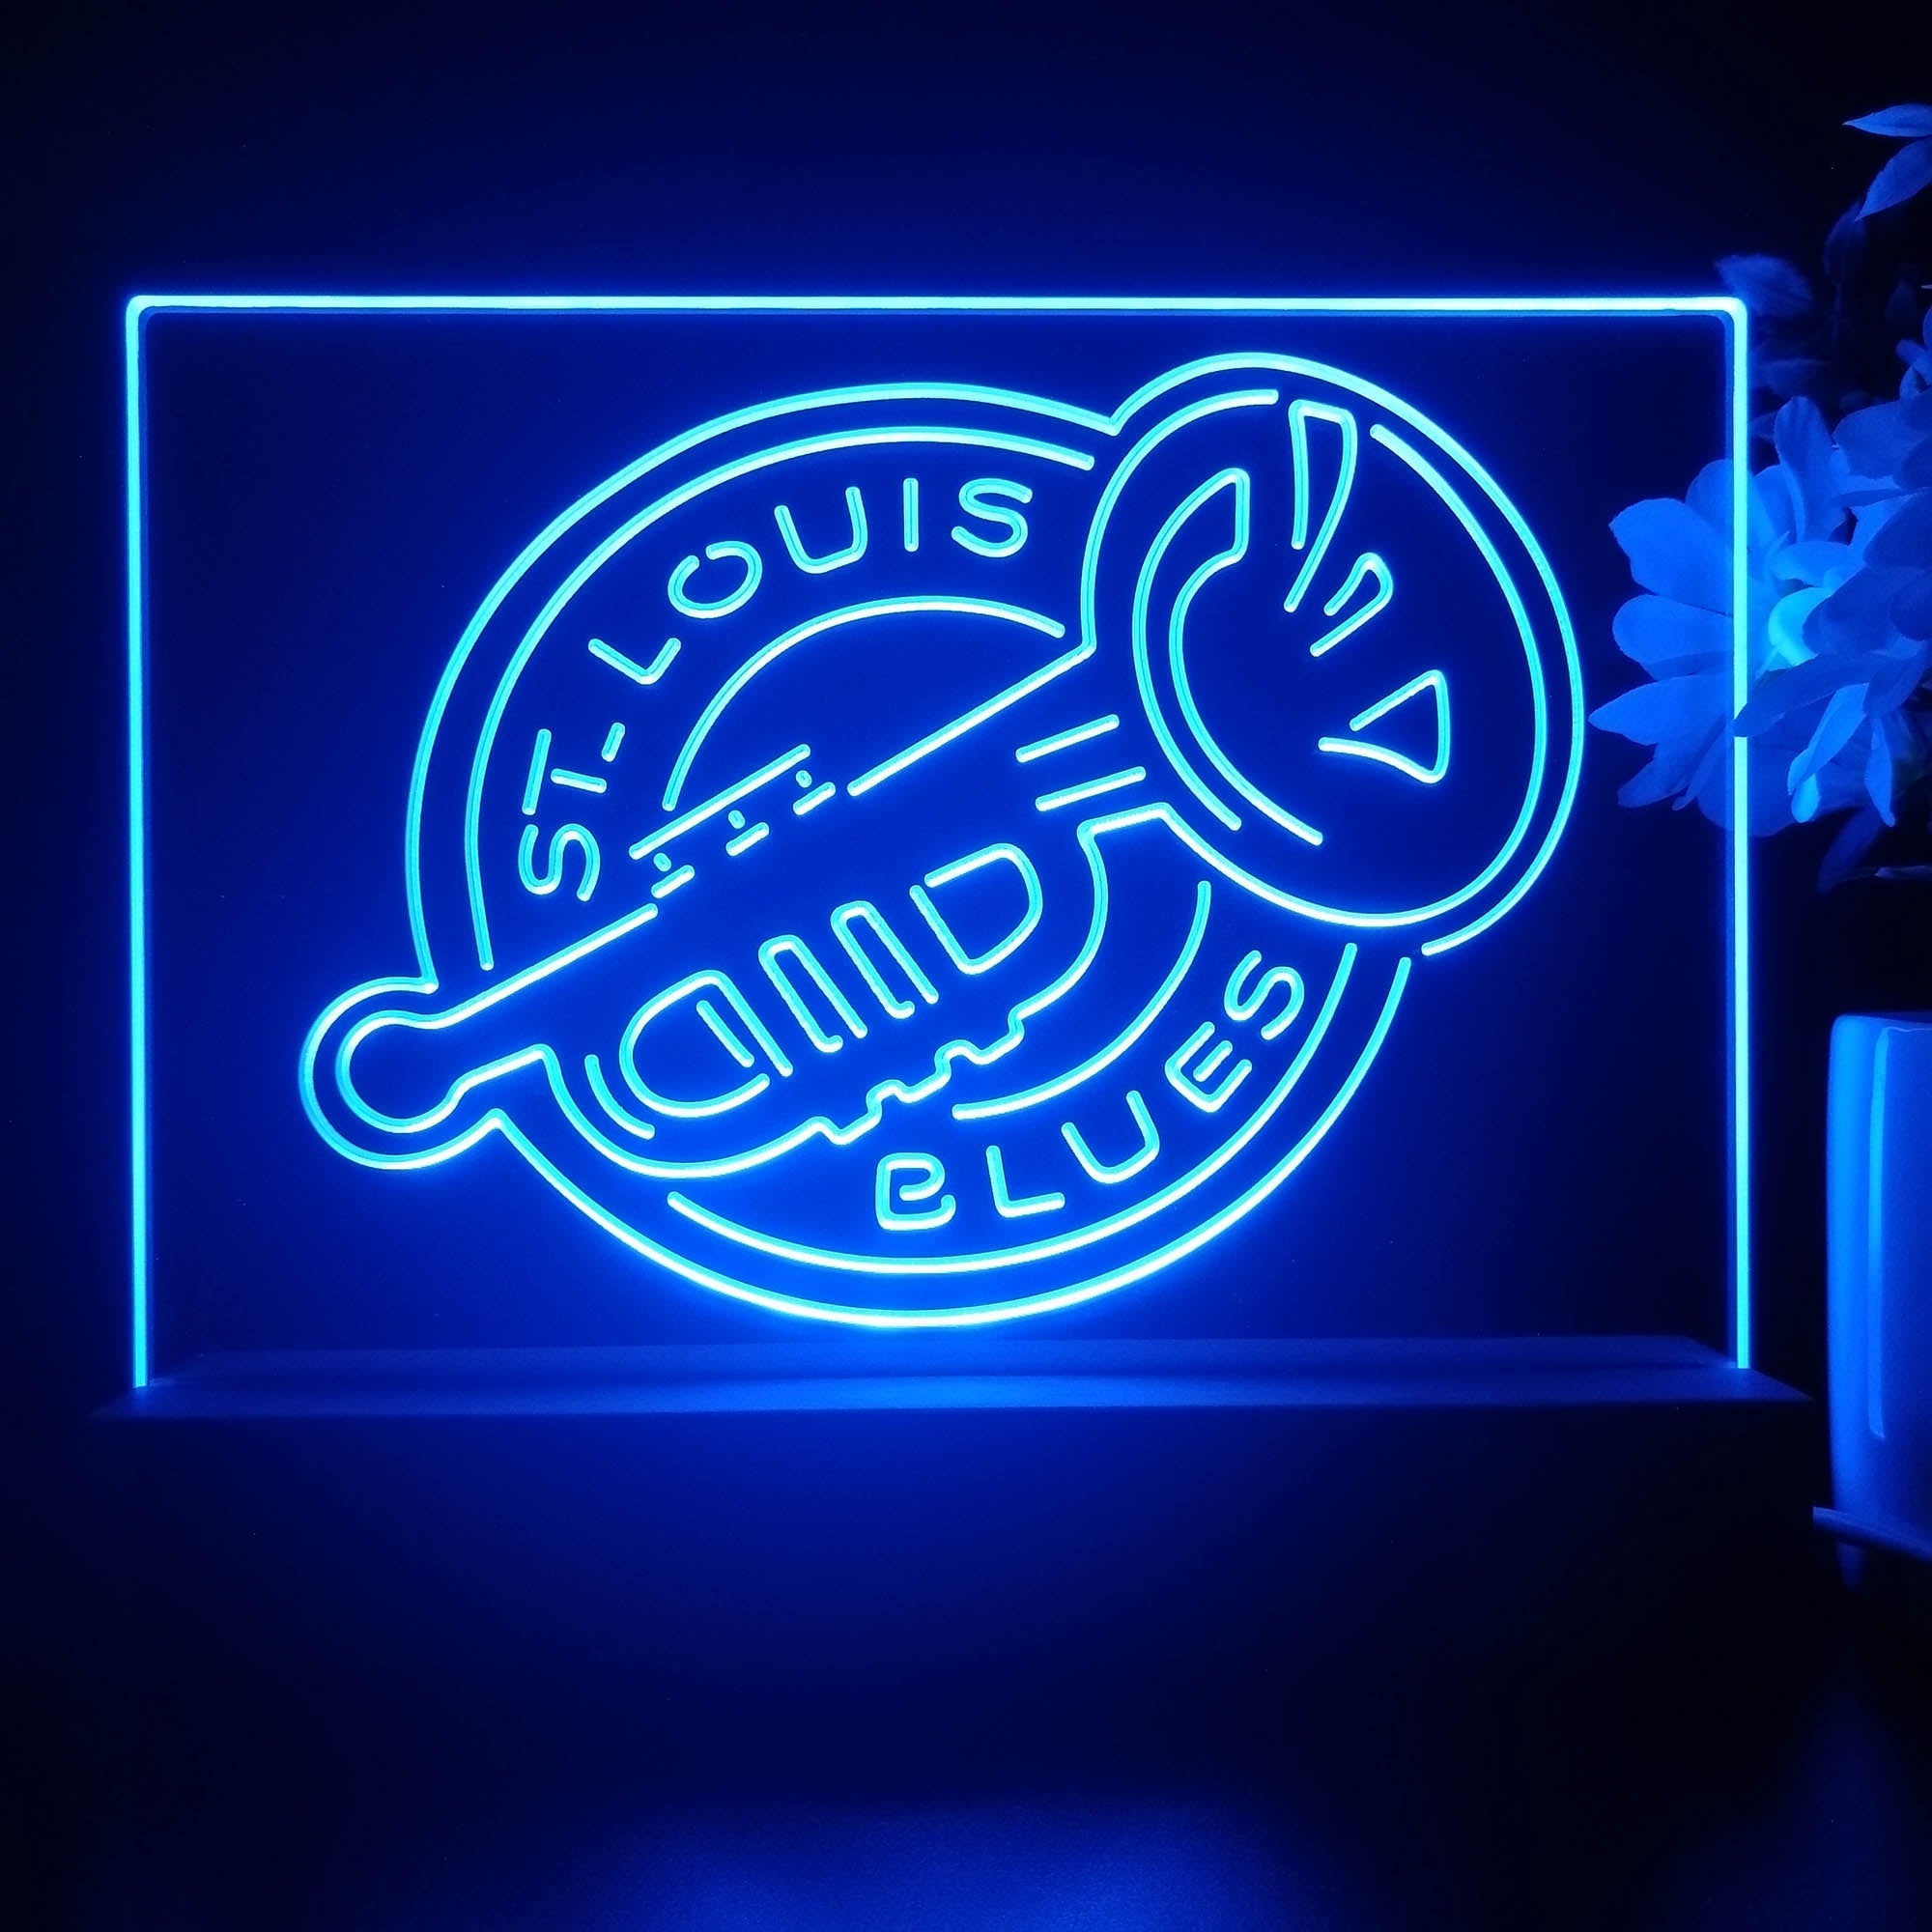 St Louis Blues Night Light Pub Bar Lamp